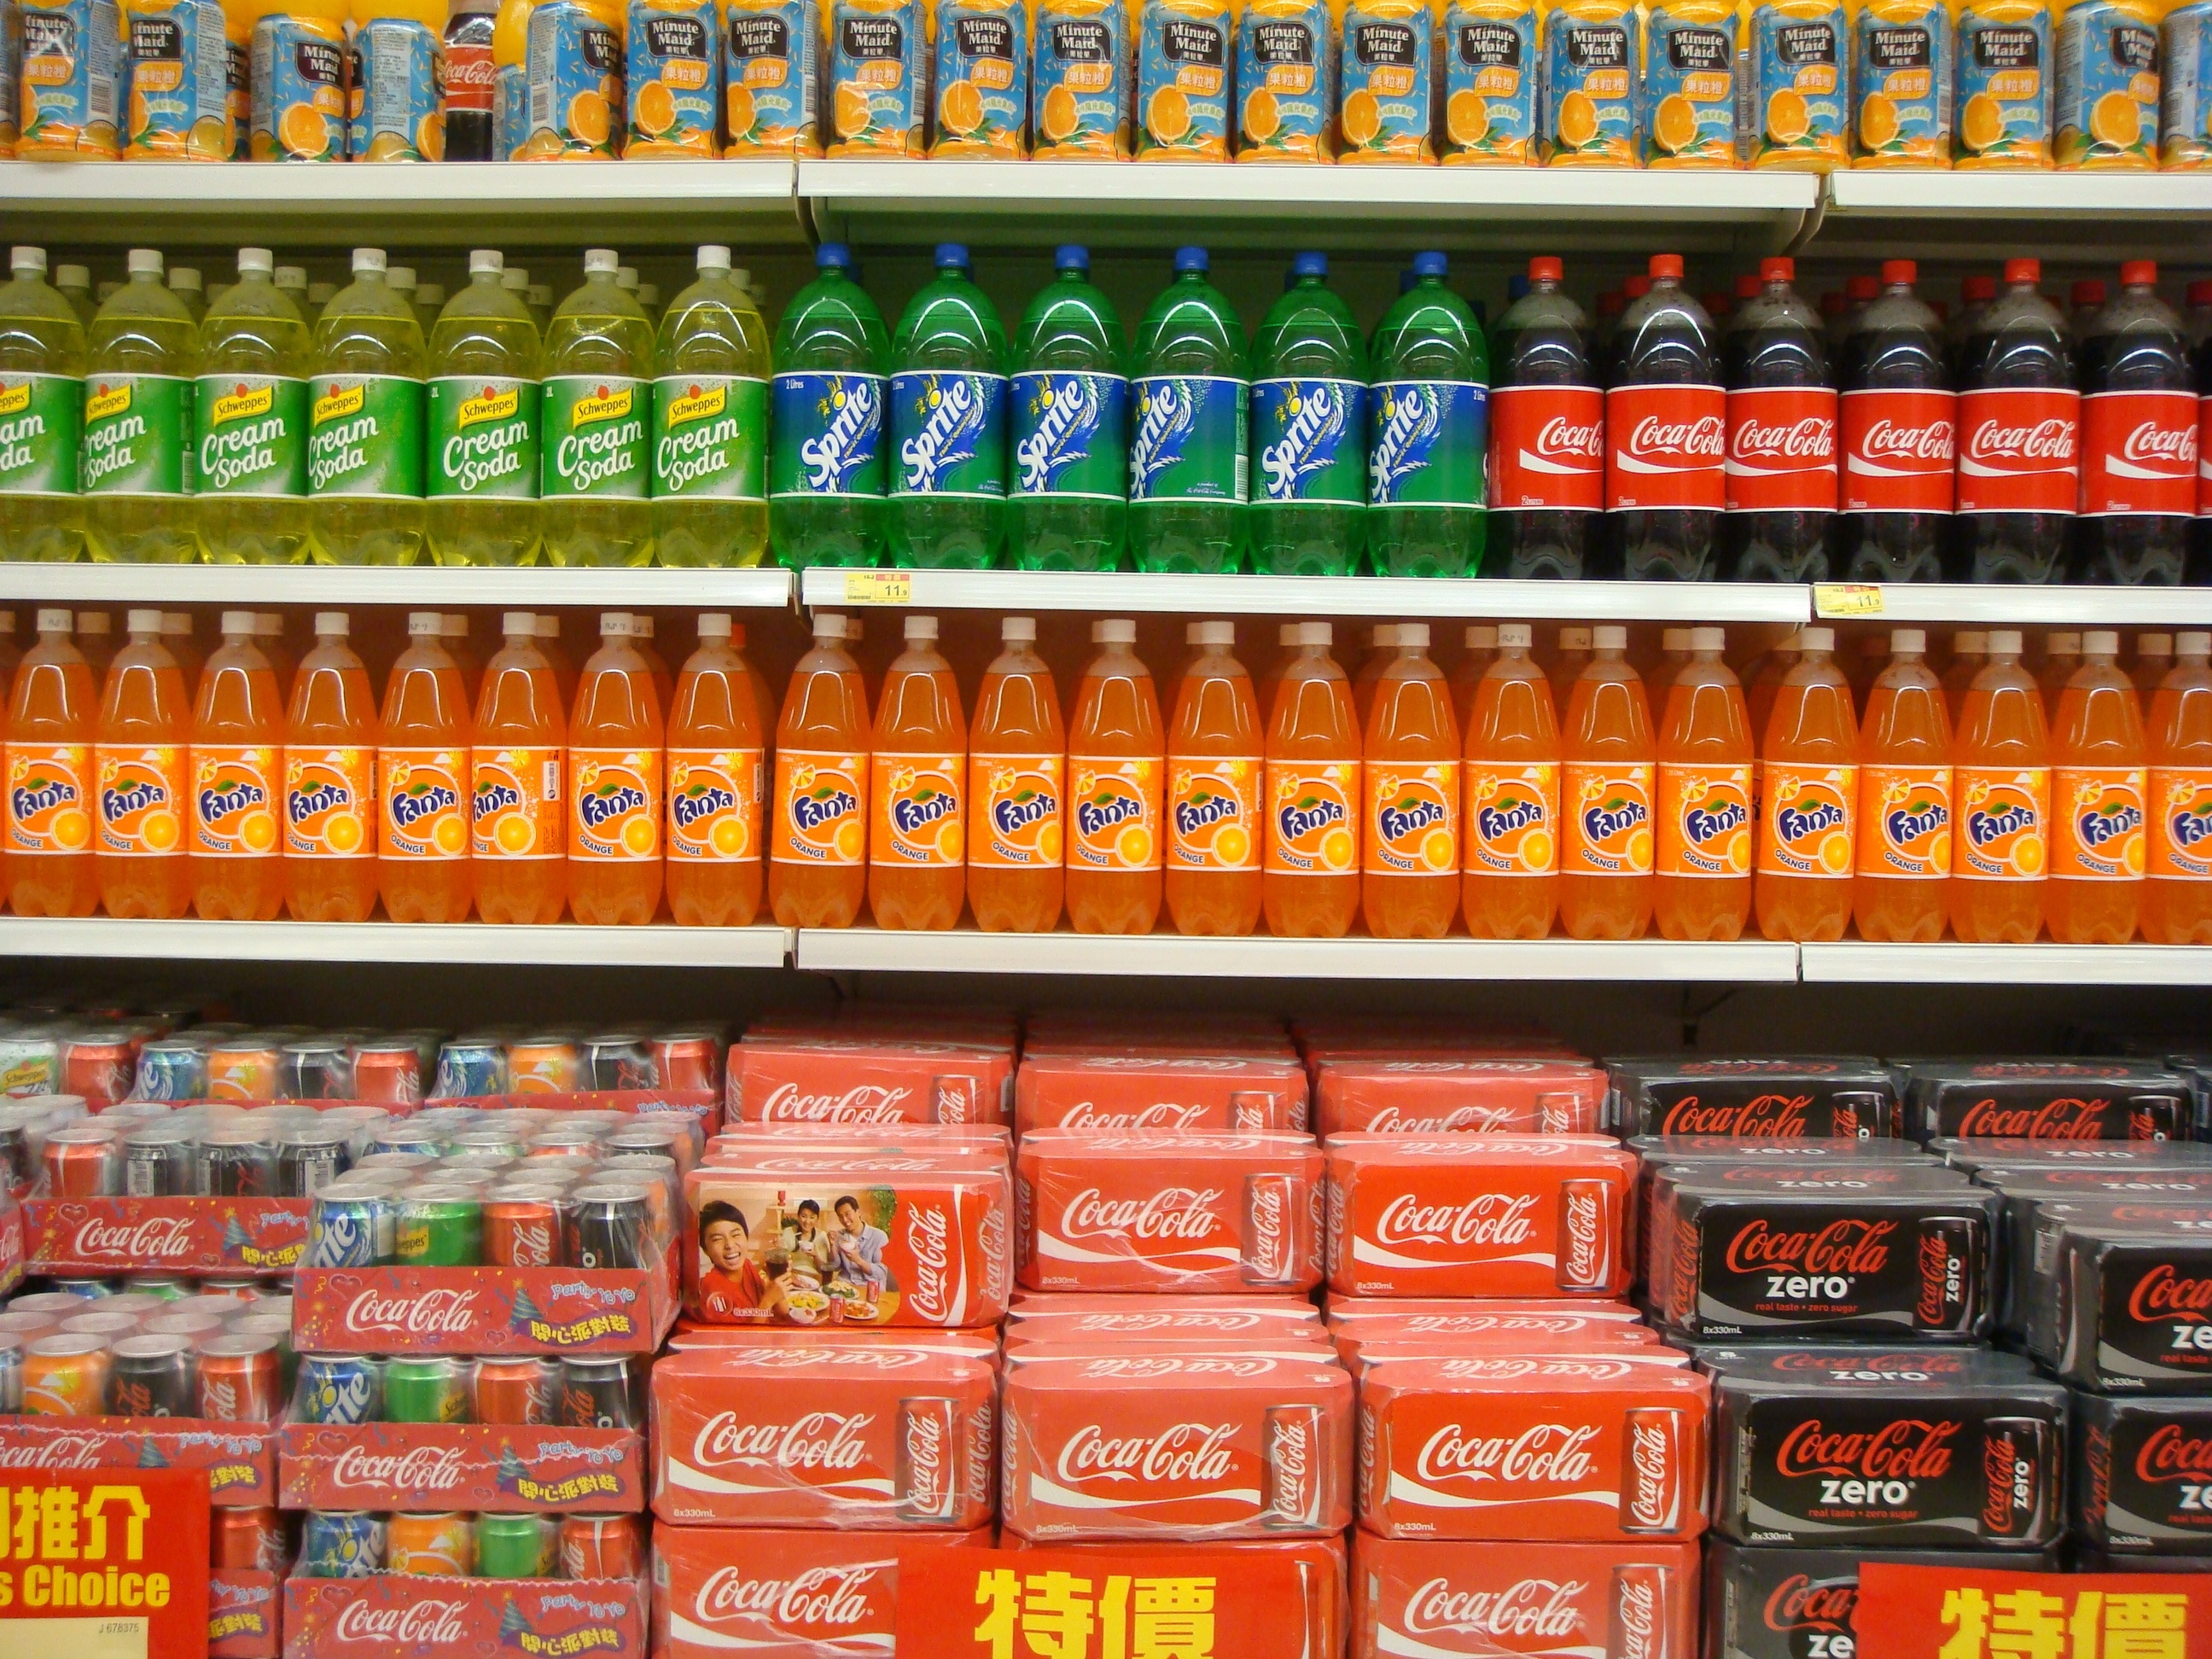 soda products arranged on retail gondola